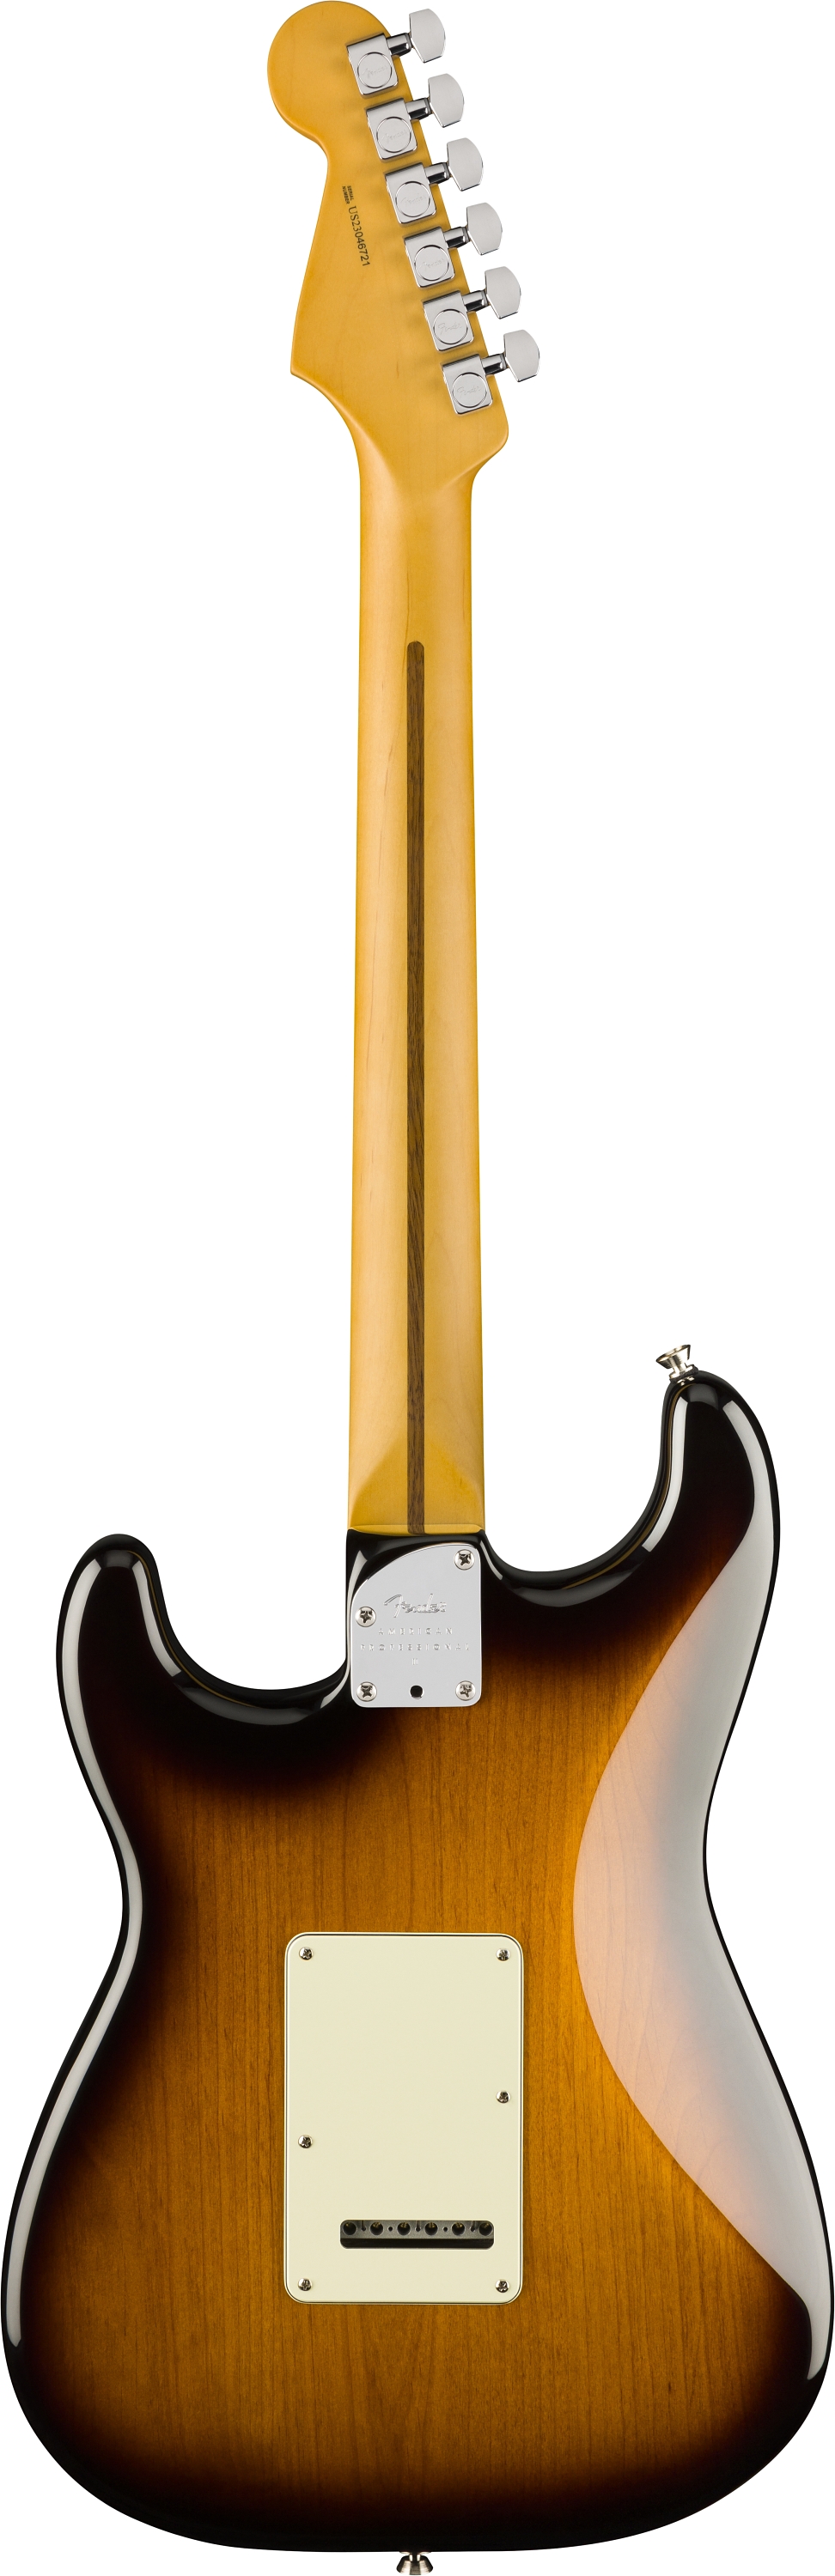 Fender Strat American Professional Ii 70th Anniversary Usa 3s Trem Rw - 2-color Sunburst - E-Gitarre in Str-Form - Variation 2